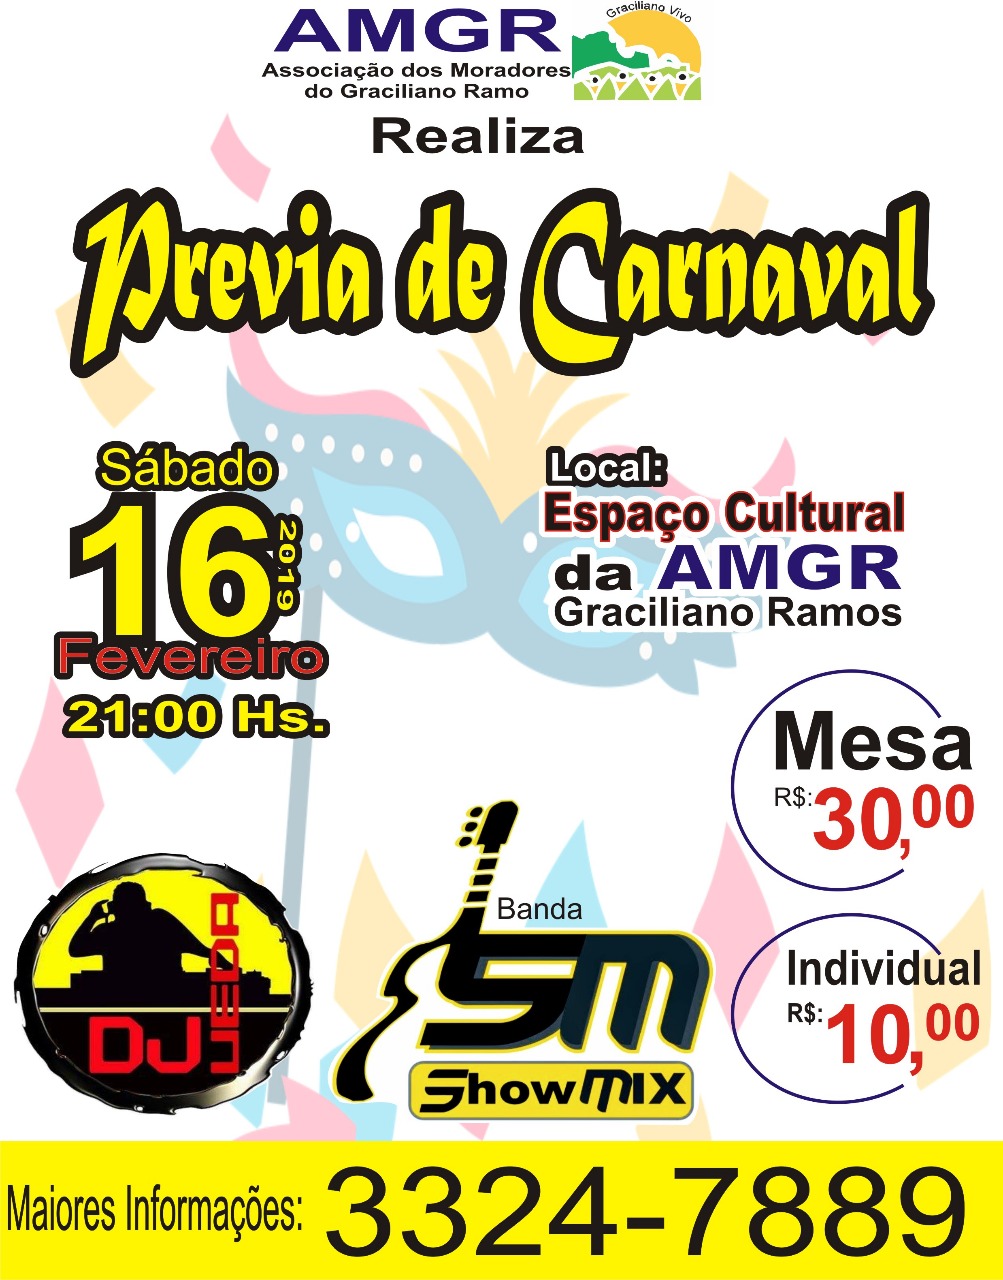 AMGR PRevia Carnaval 2019